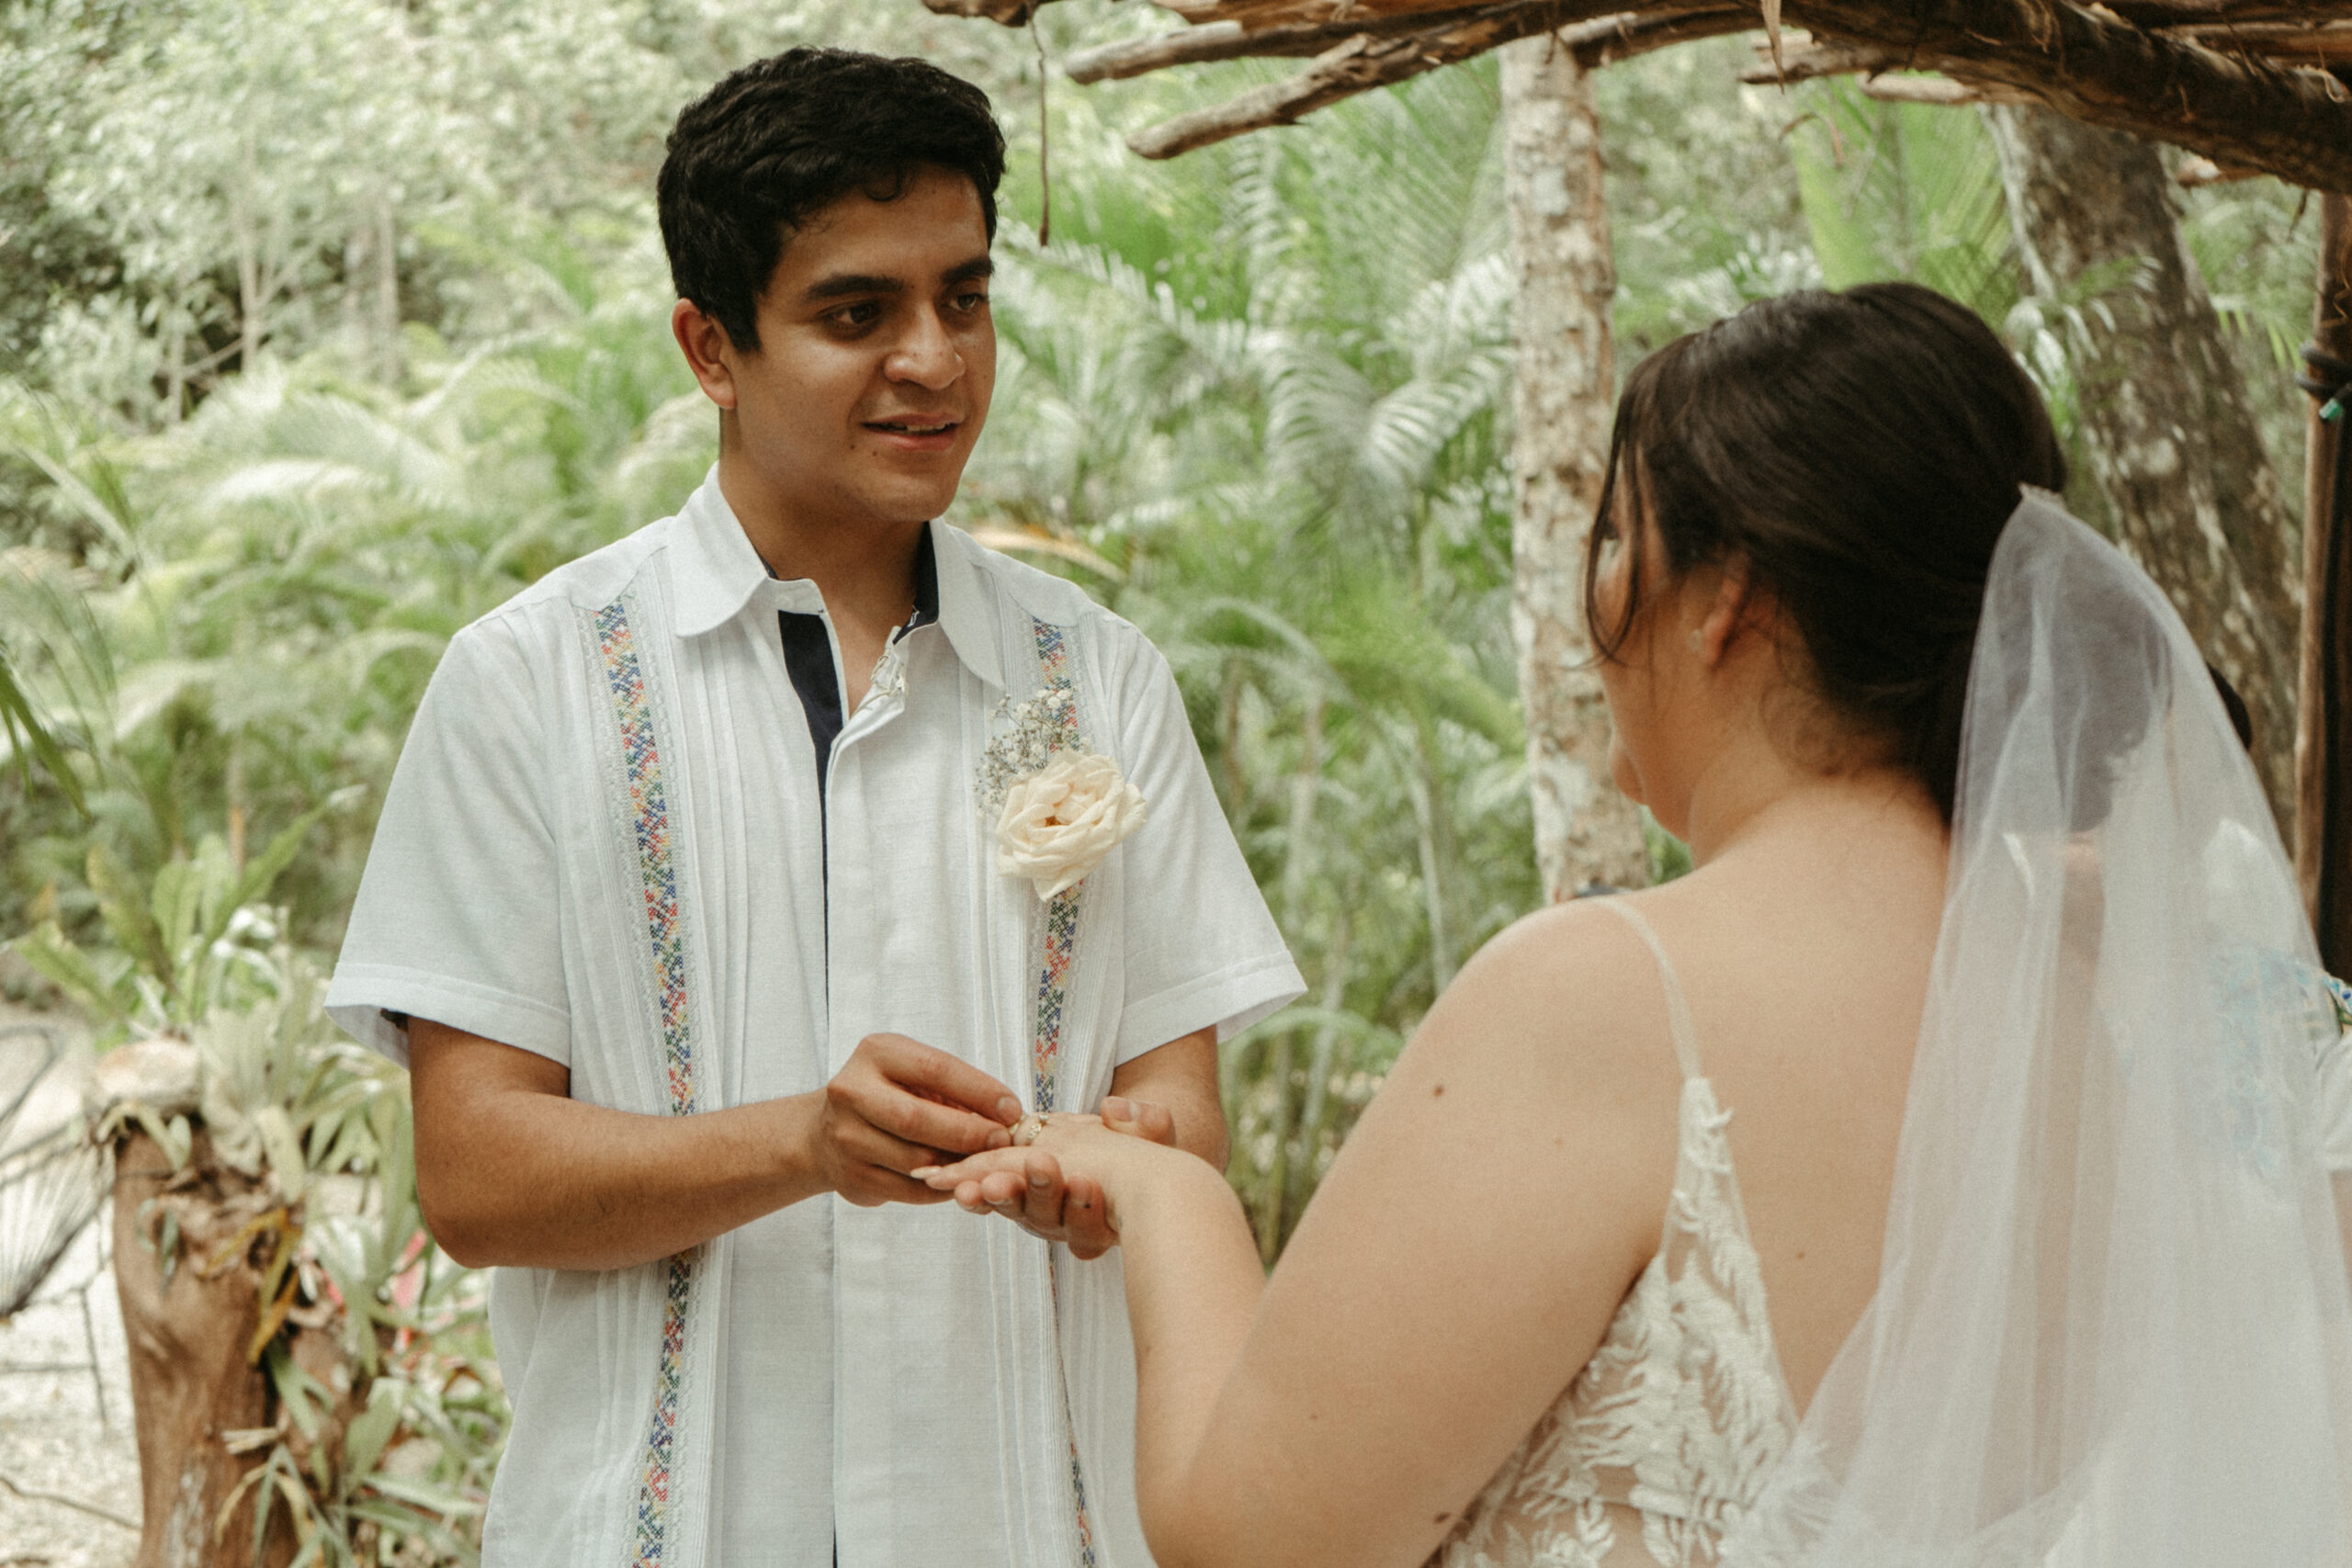 cenote elvira wedding photos8